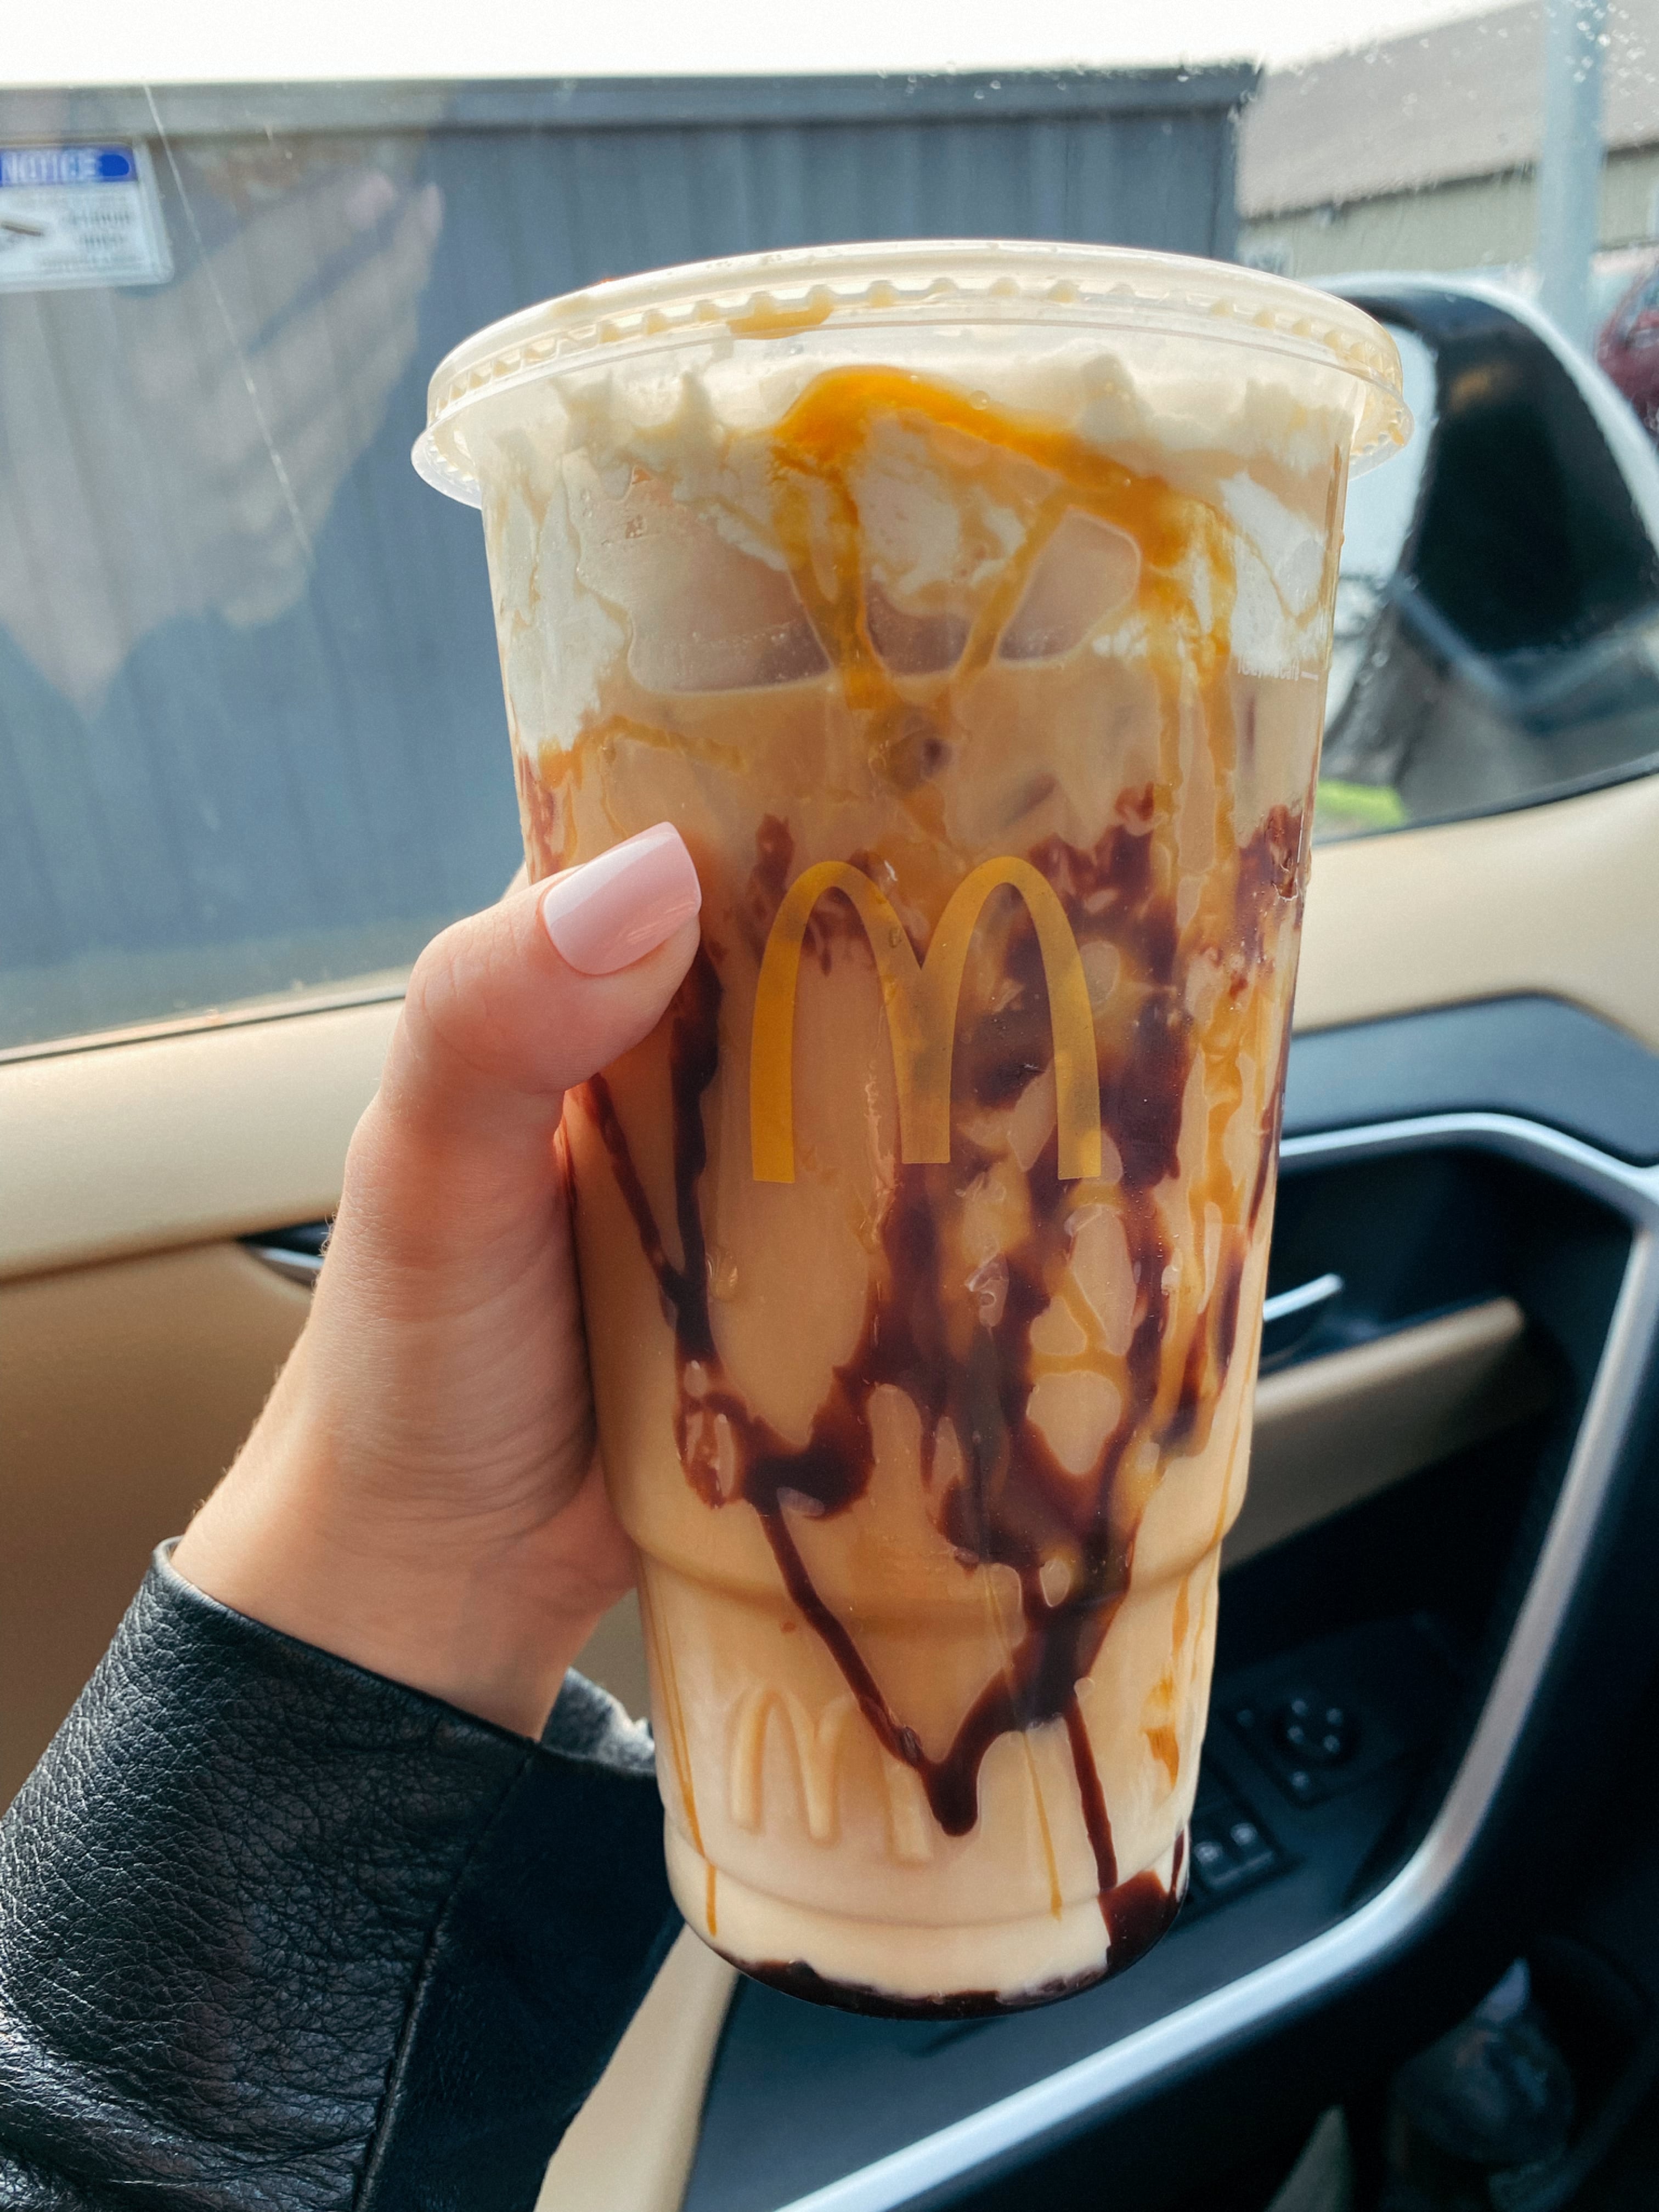 McDonald's Iced Coffee - Insanely Good